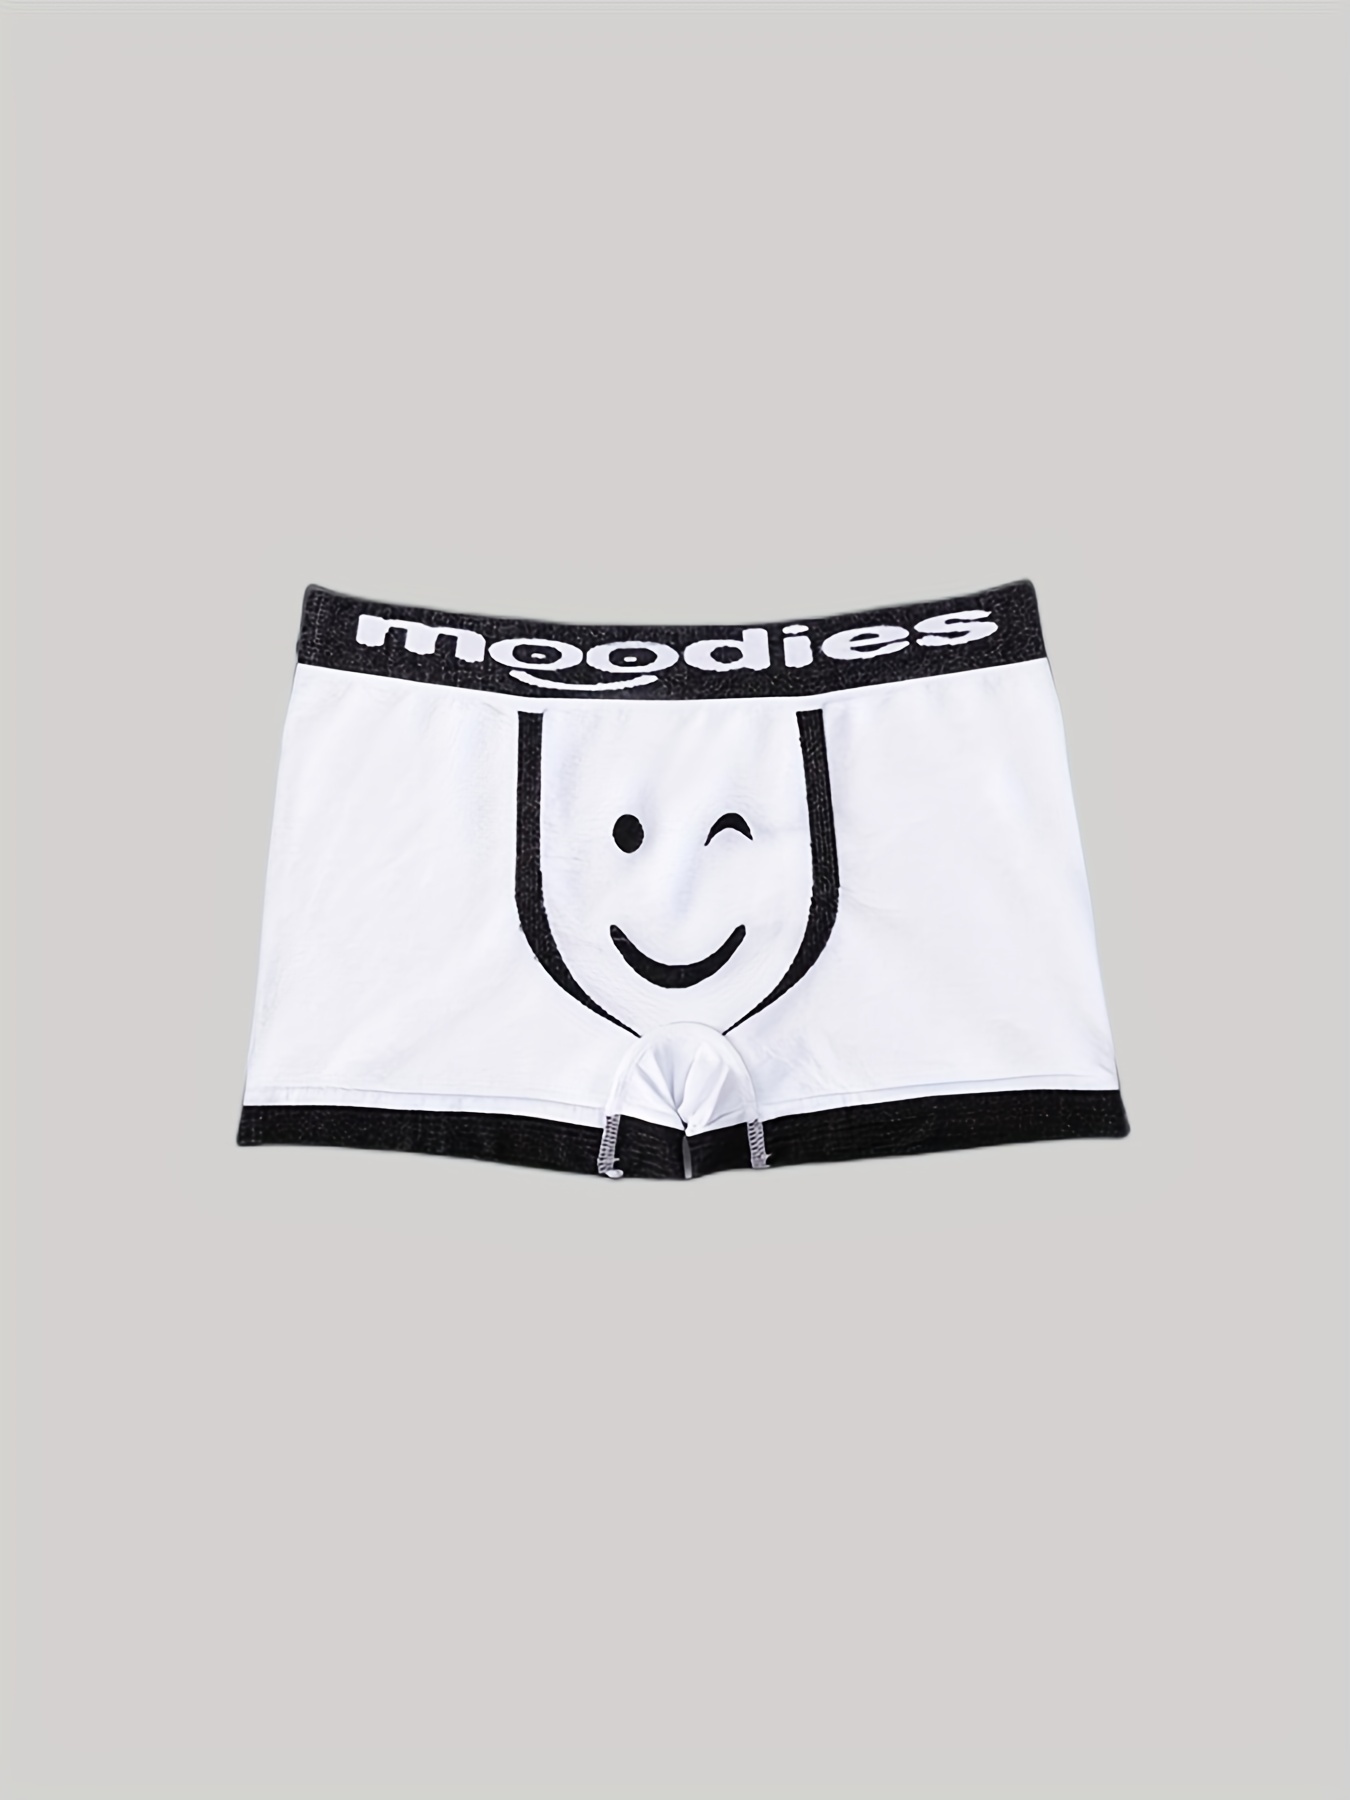 1 3pcs mens emotional face breathable boxer brief soft comfortable underwear for man details 12